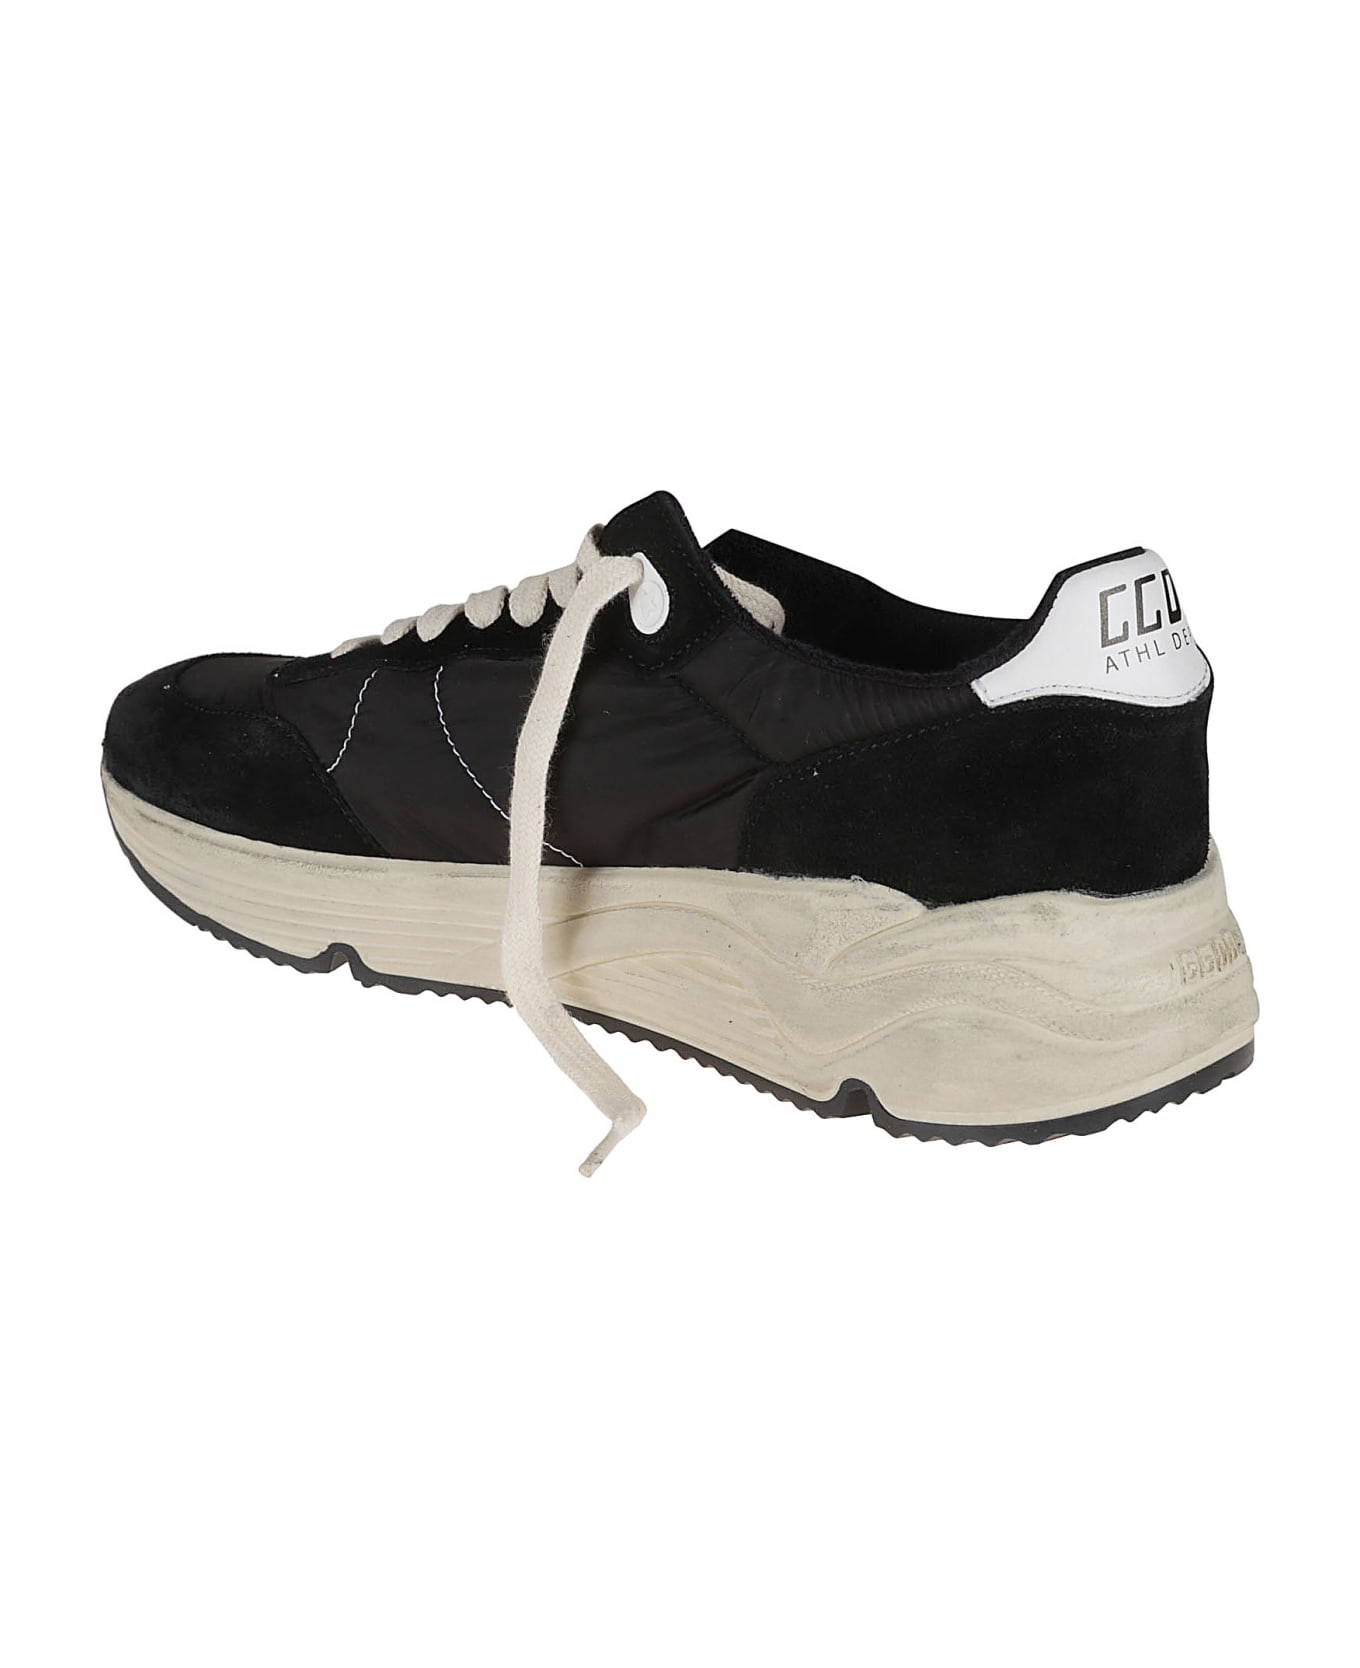 Golden Goose Running Sole Sneakers - Black/White